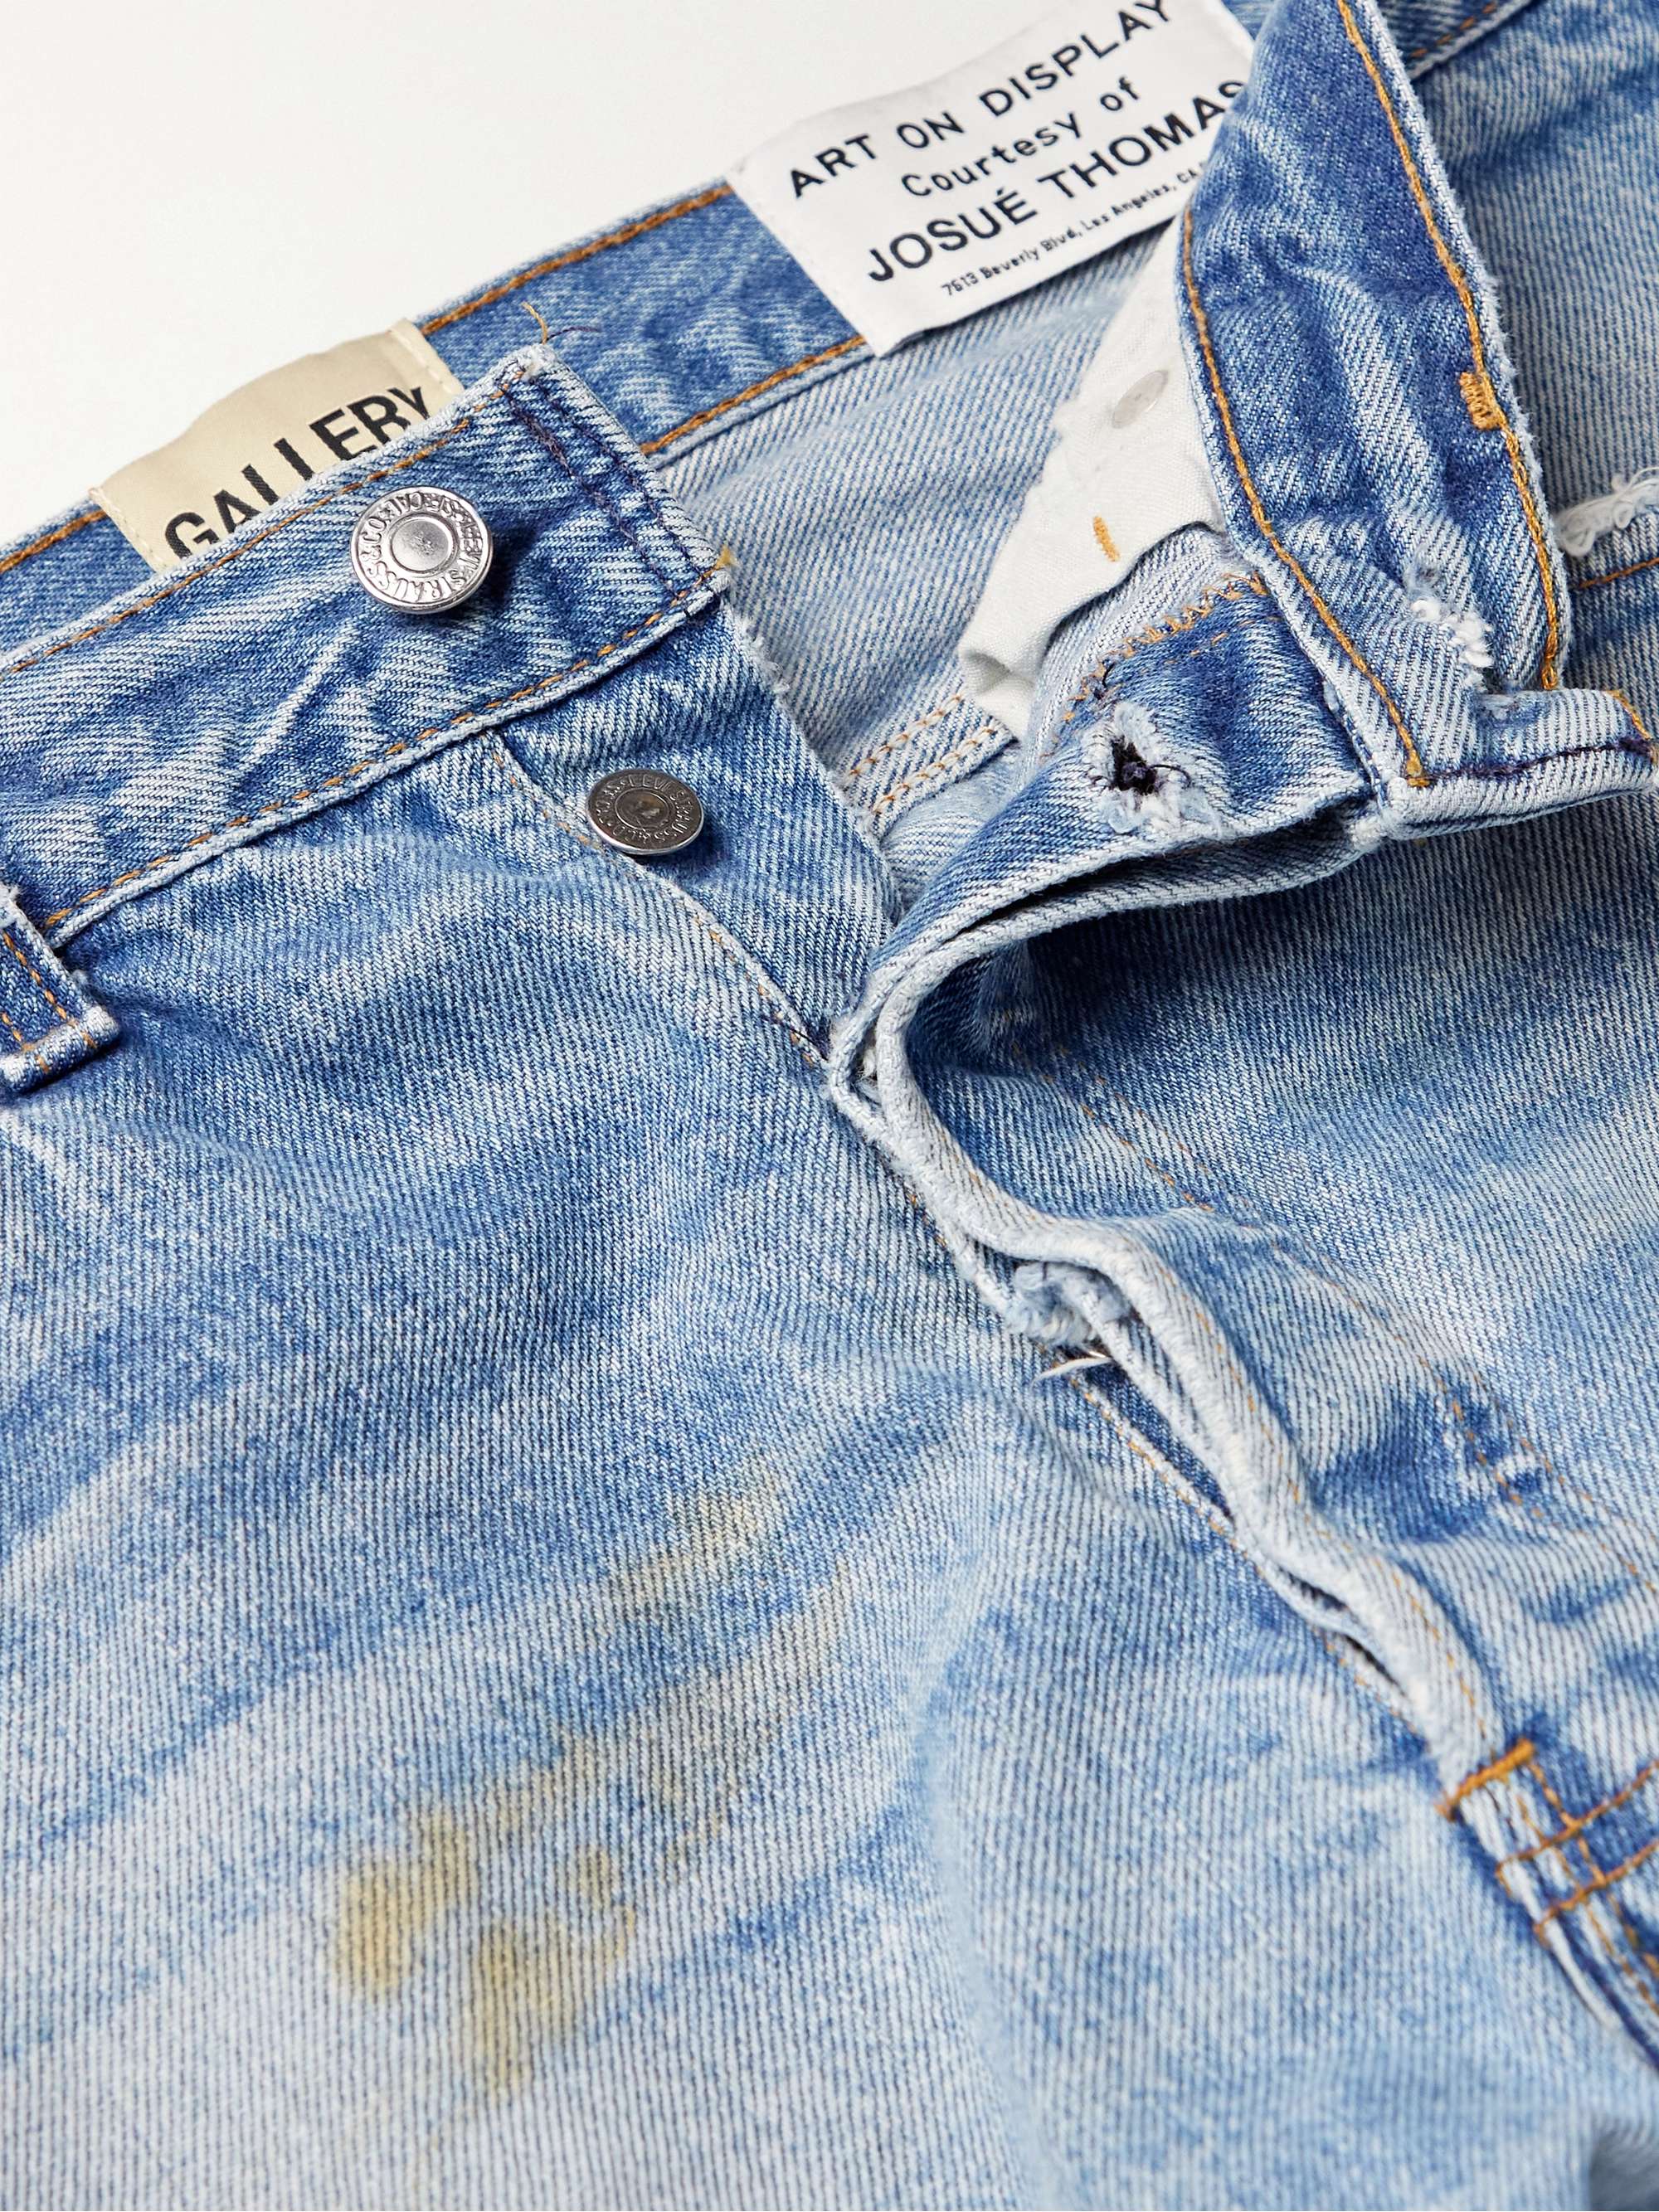 GALLERY DEPT. LA Flare Slim-Fit Distressed Denim Jeans